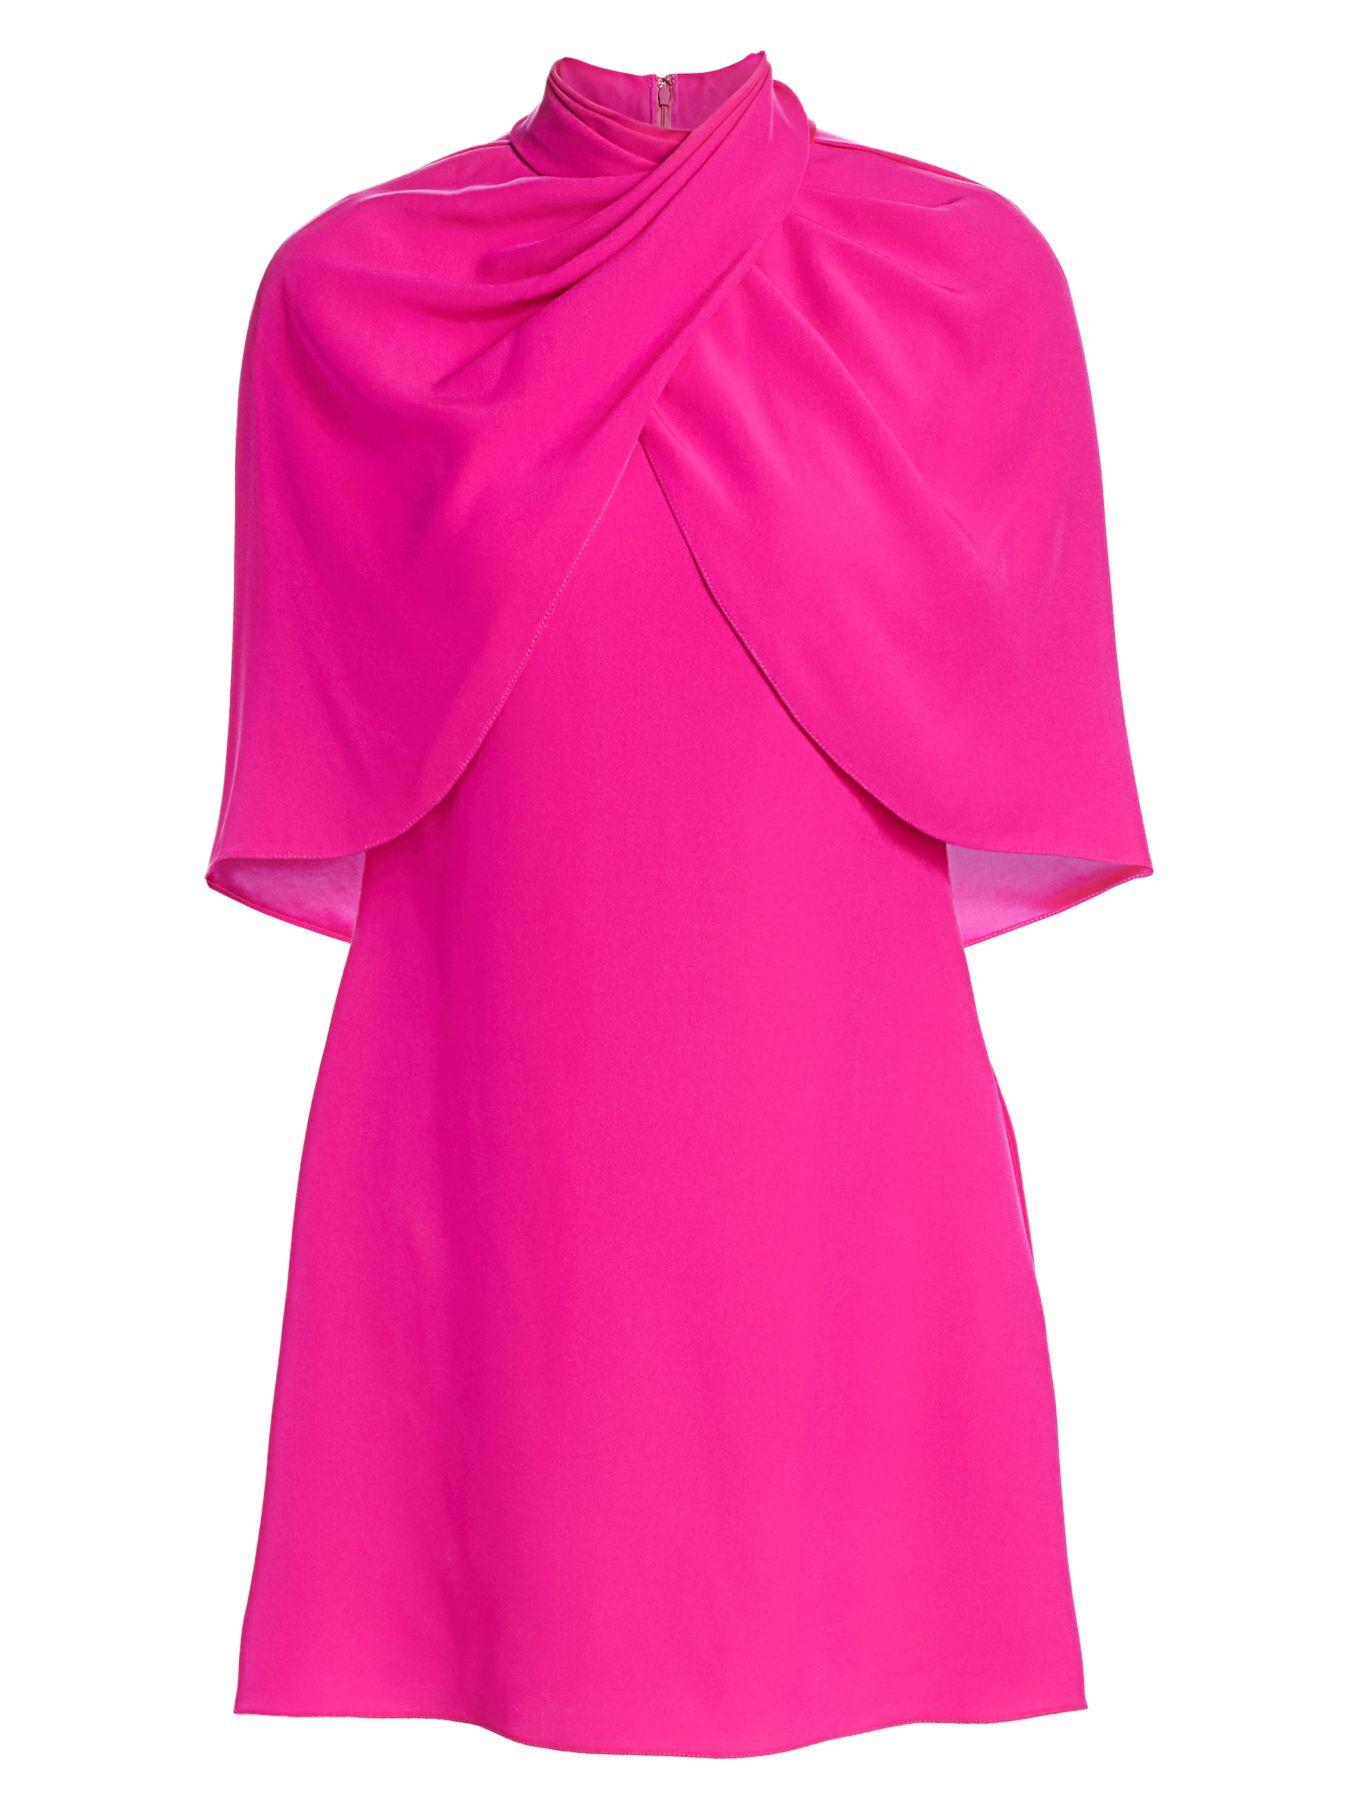 brandon maxwell pink dress